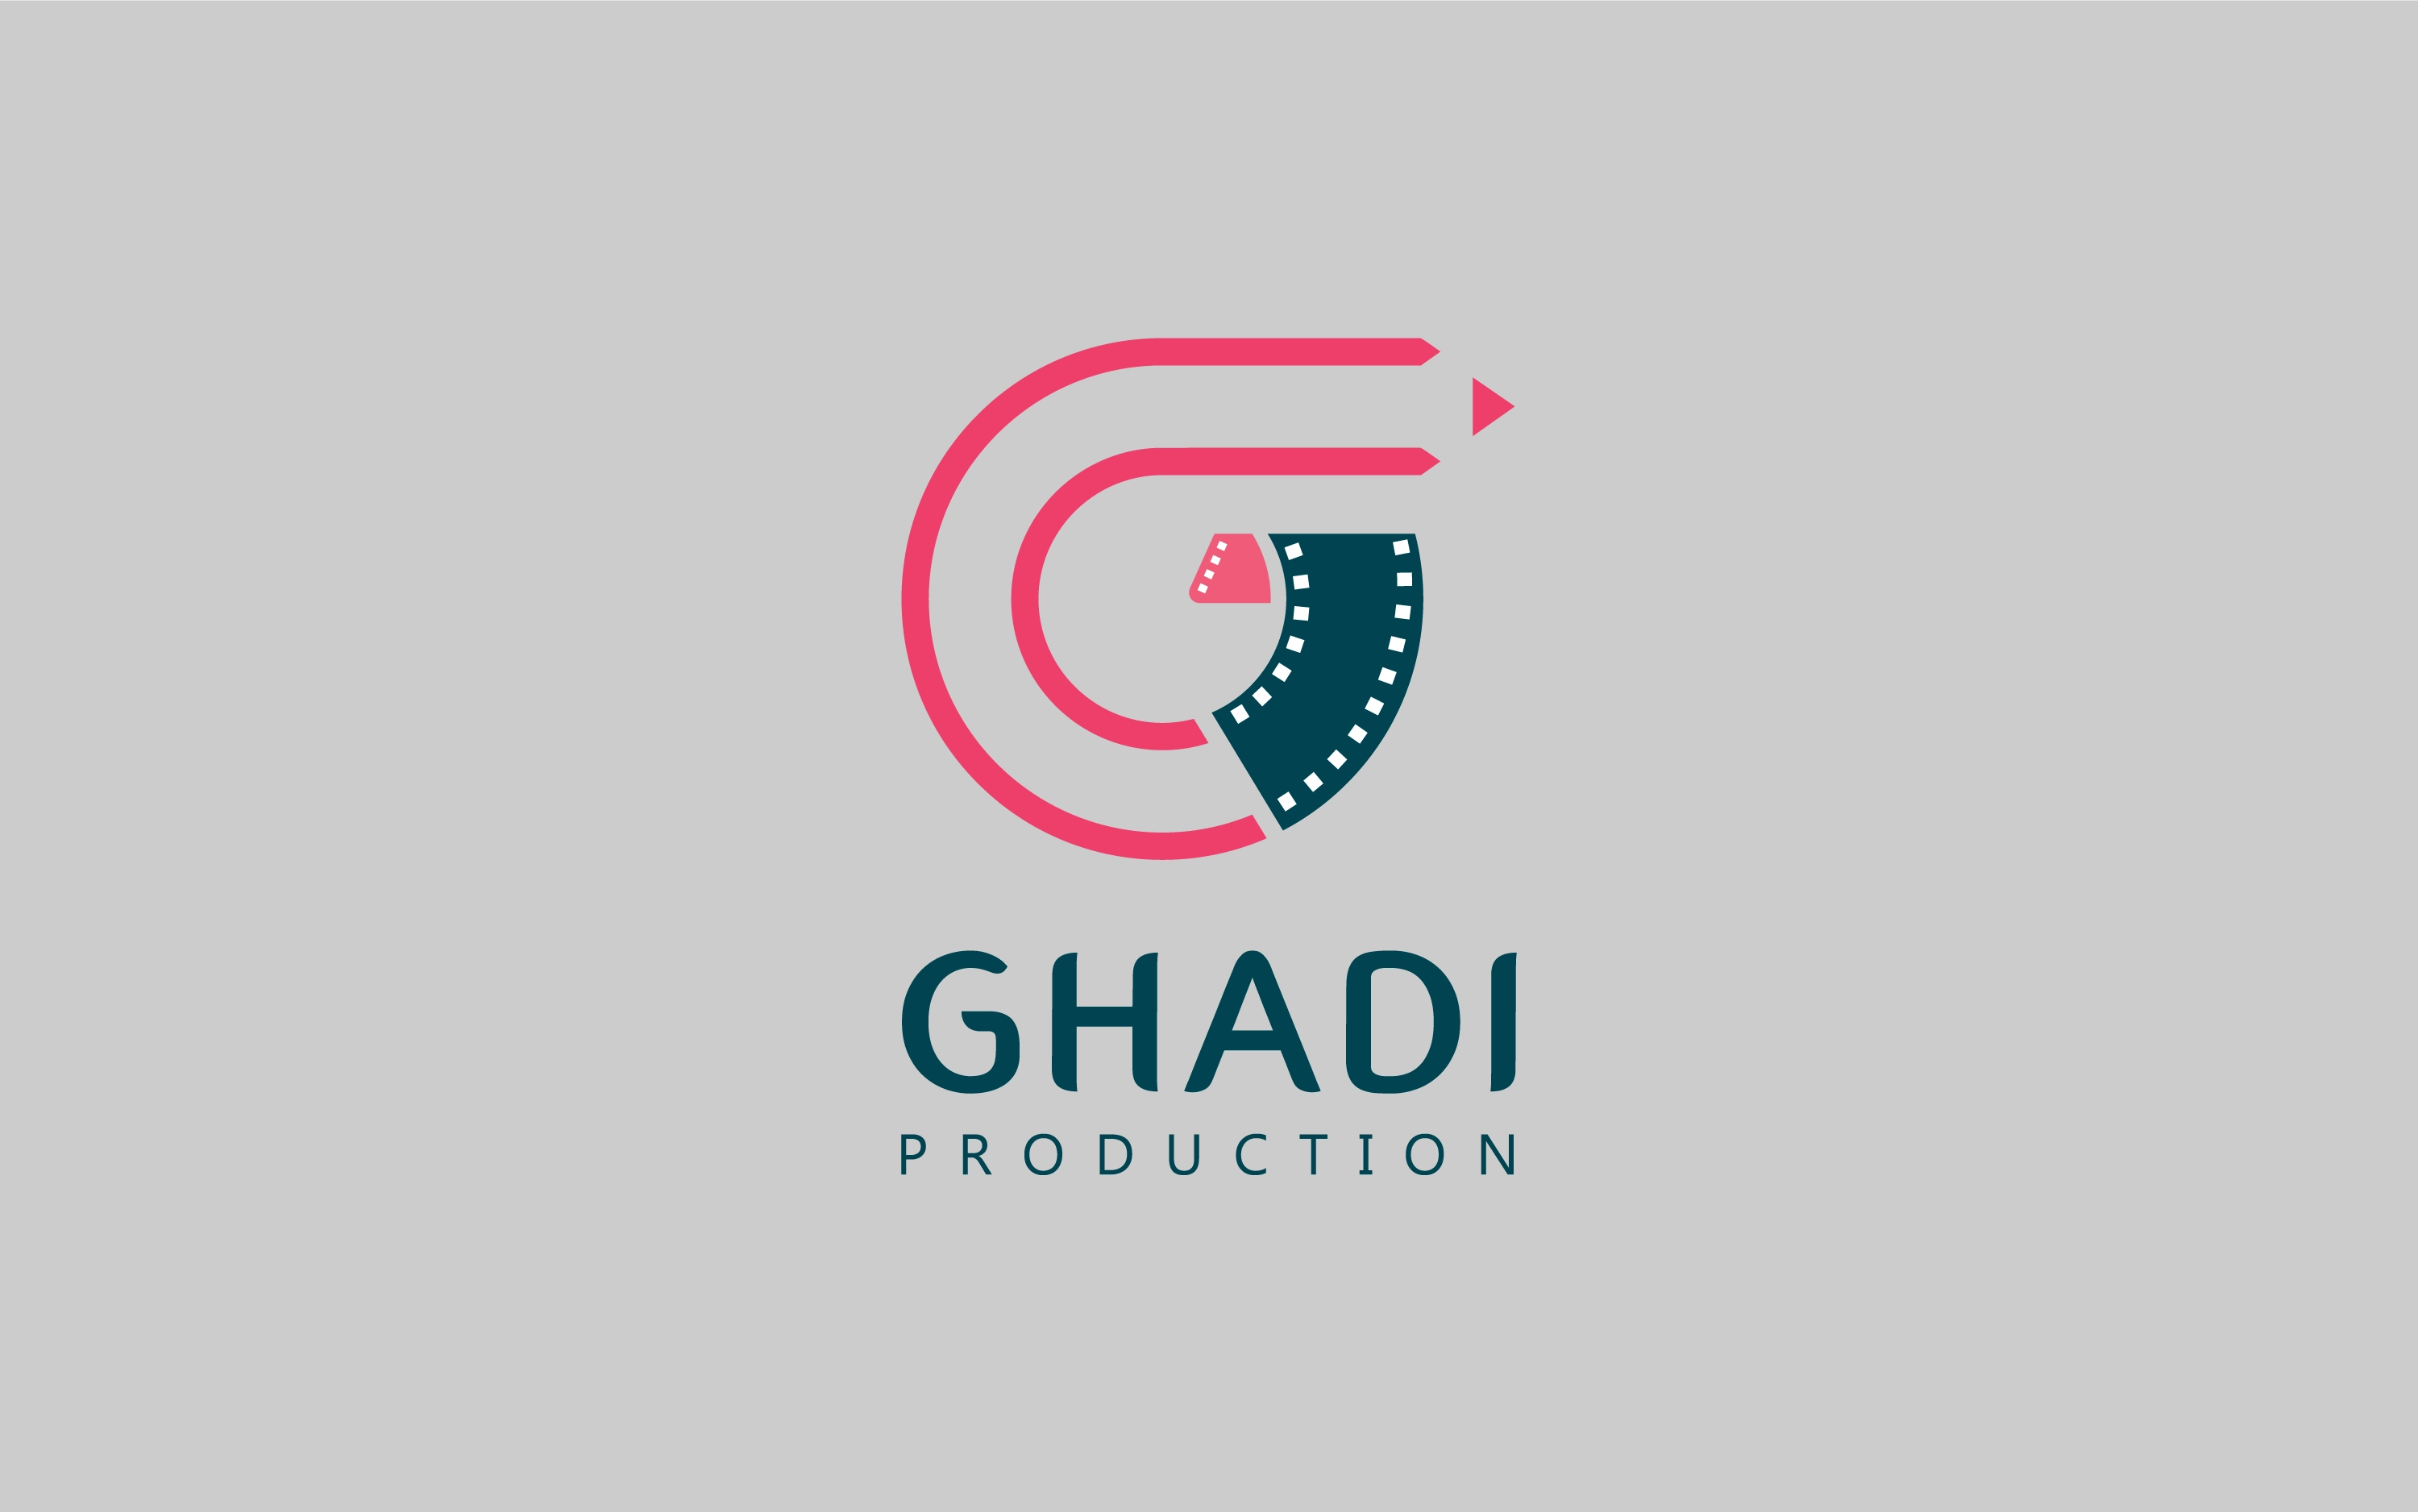 Ghadi Production